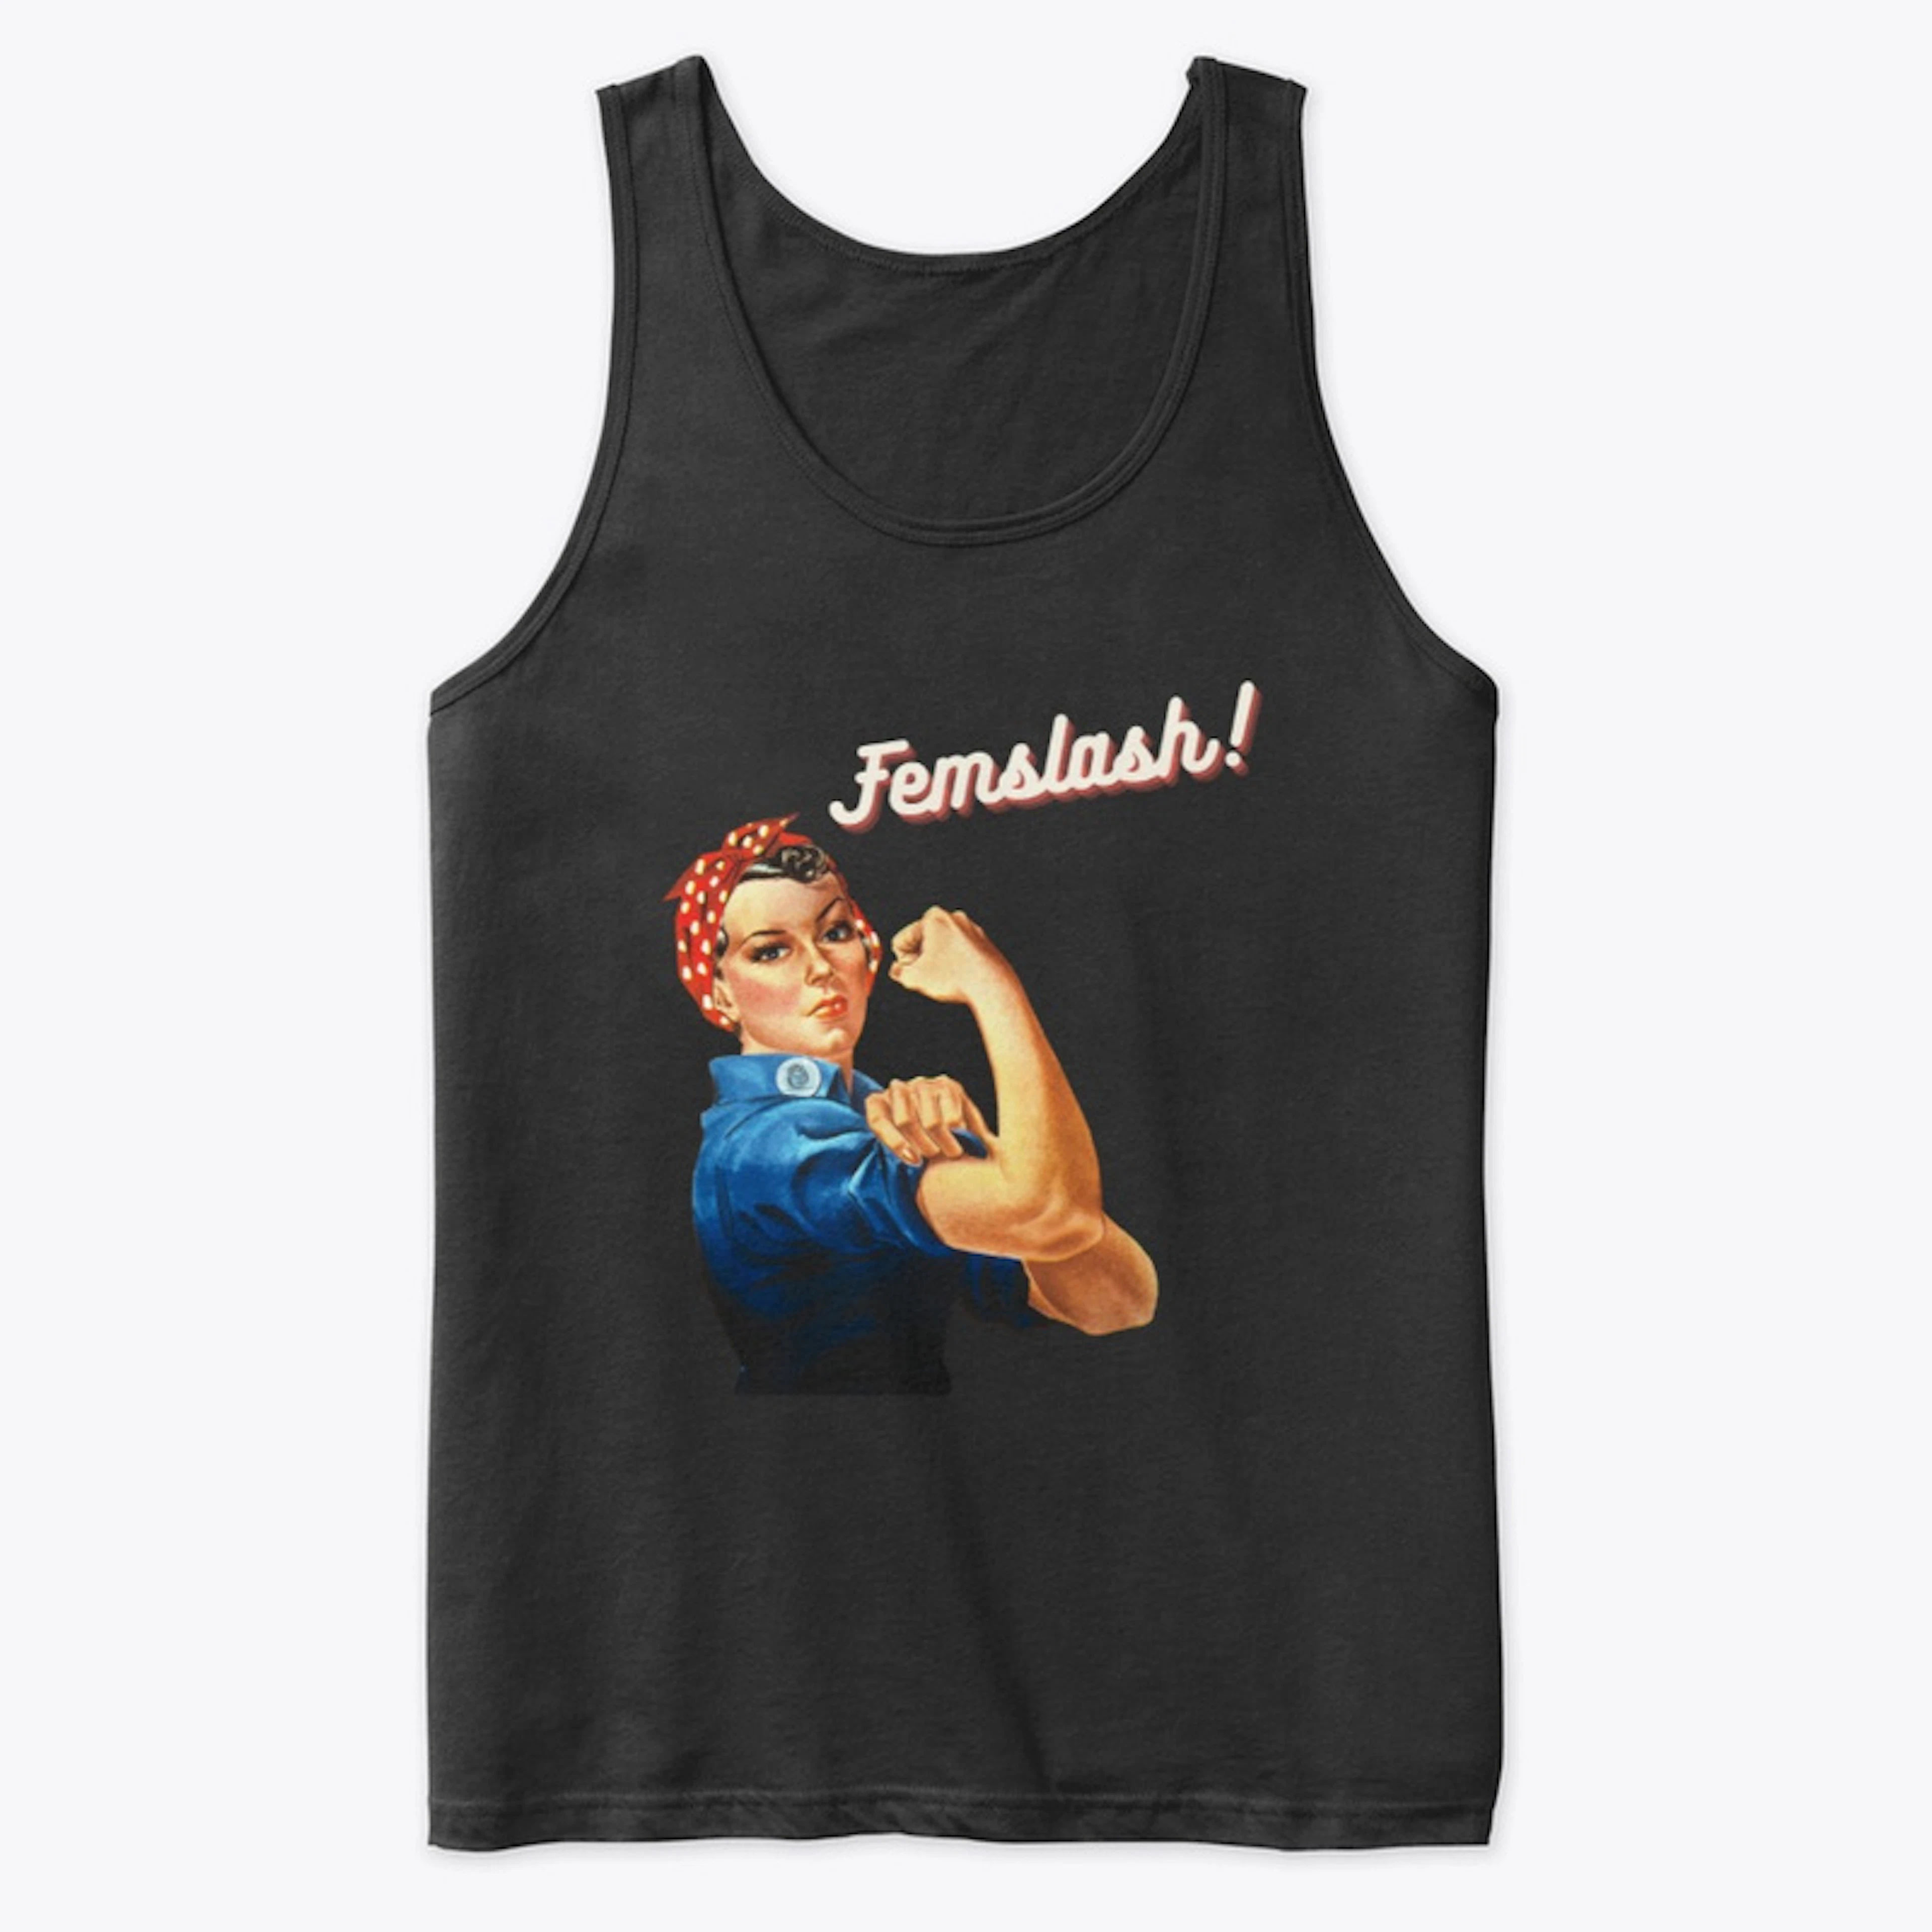 Rosie the Riveter Femslash Fanfic design